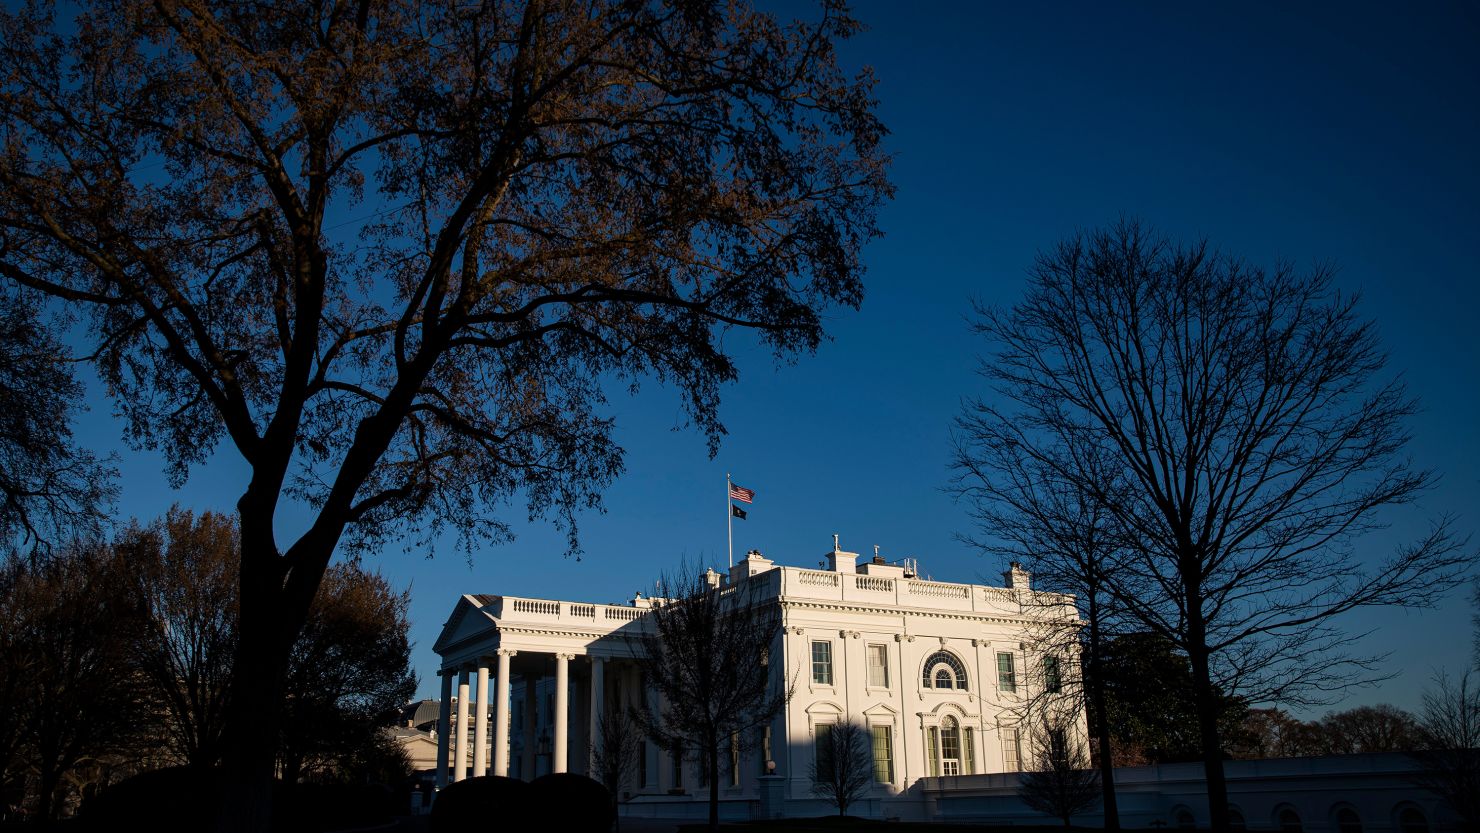 The White House in Washington, DC, on February 28